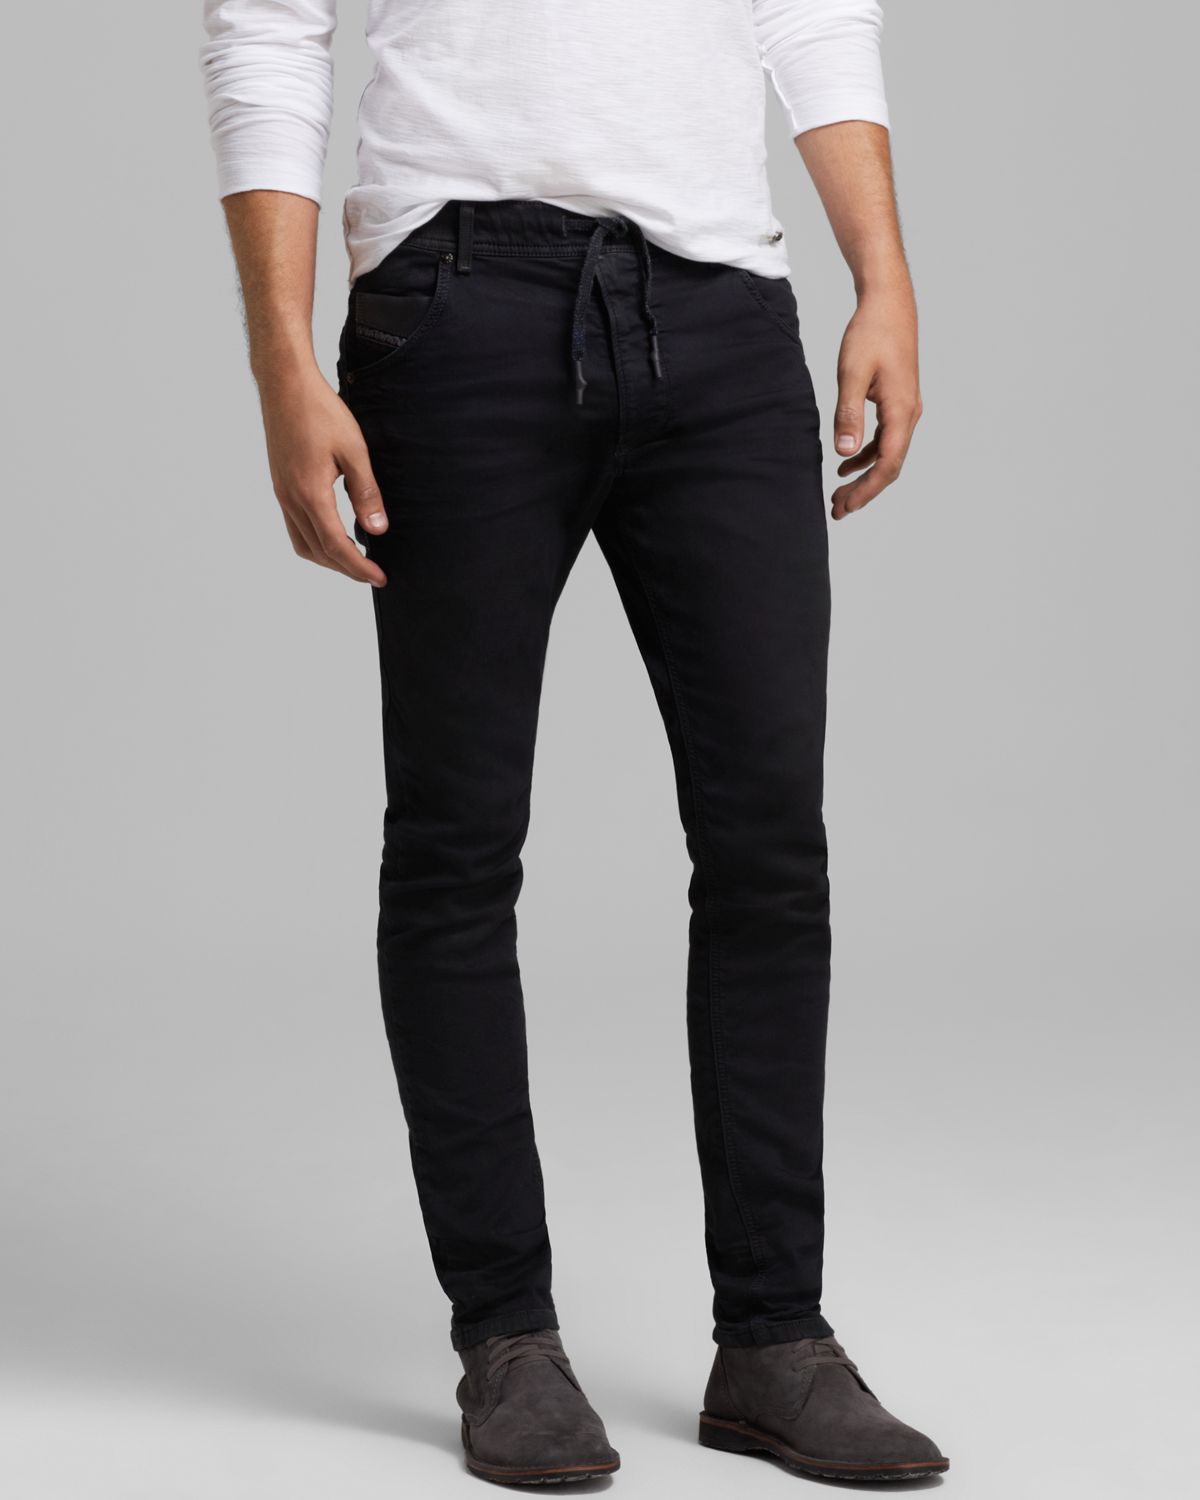 Diesel Jeans Krooley Jogg Slim Fit in Colored Denim in Black for Men